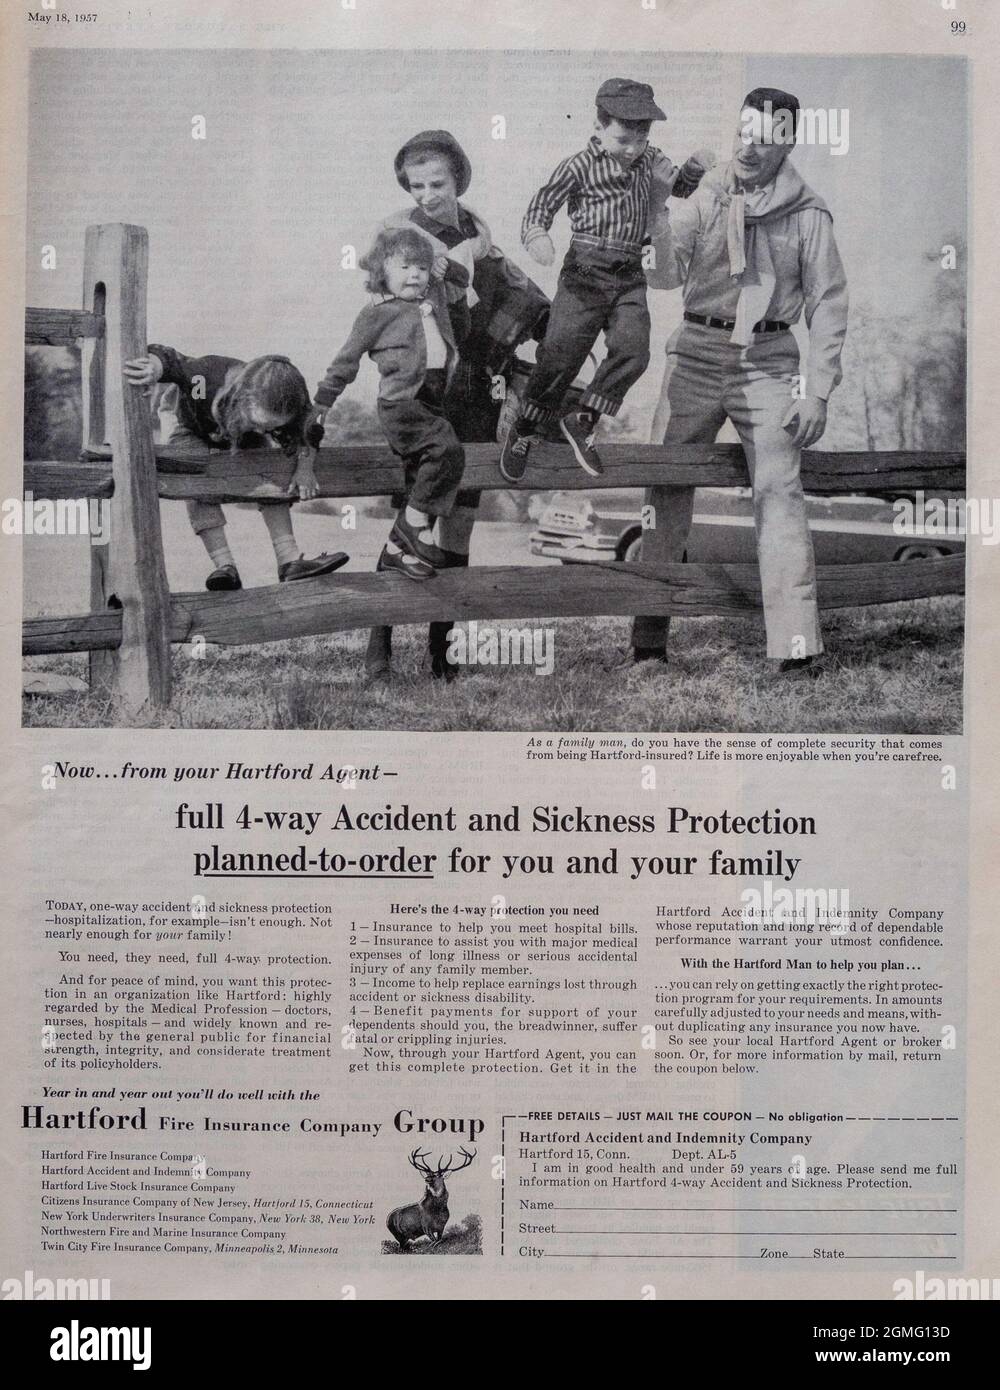 'The Saturday Evening Post' 18 May 1957 Magazine Advert, USA Stock Photo